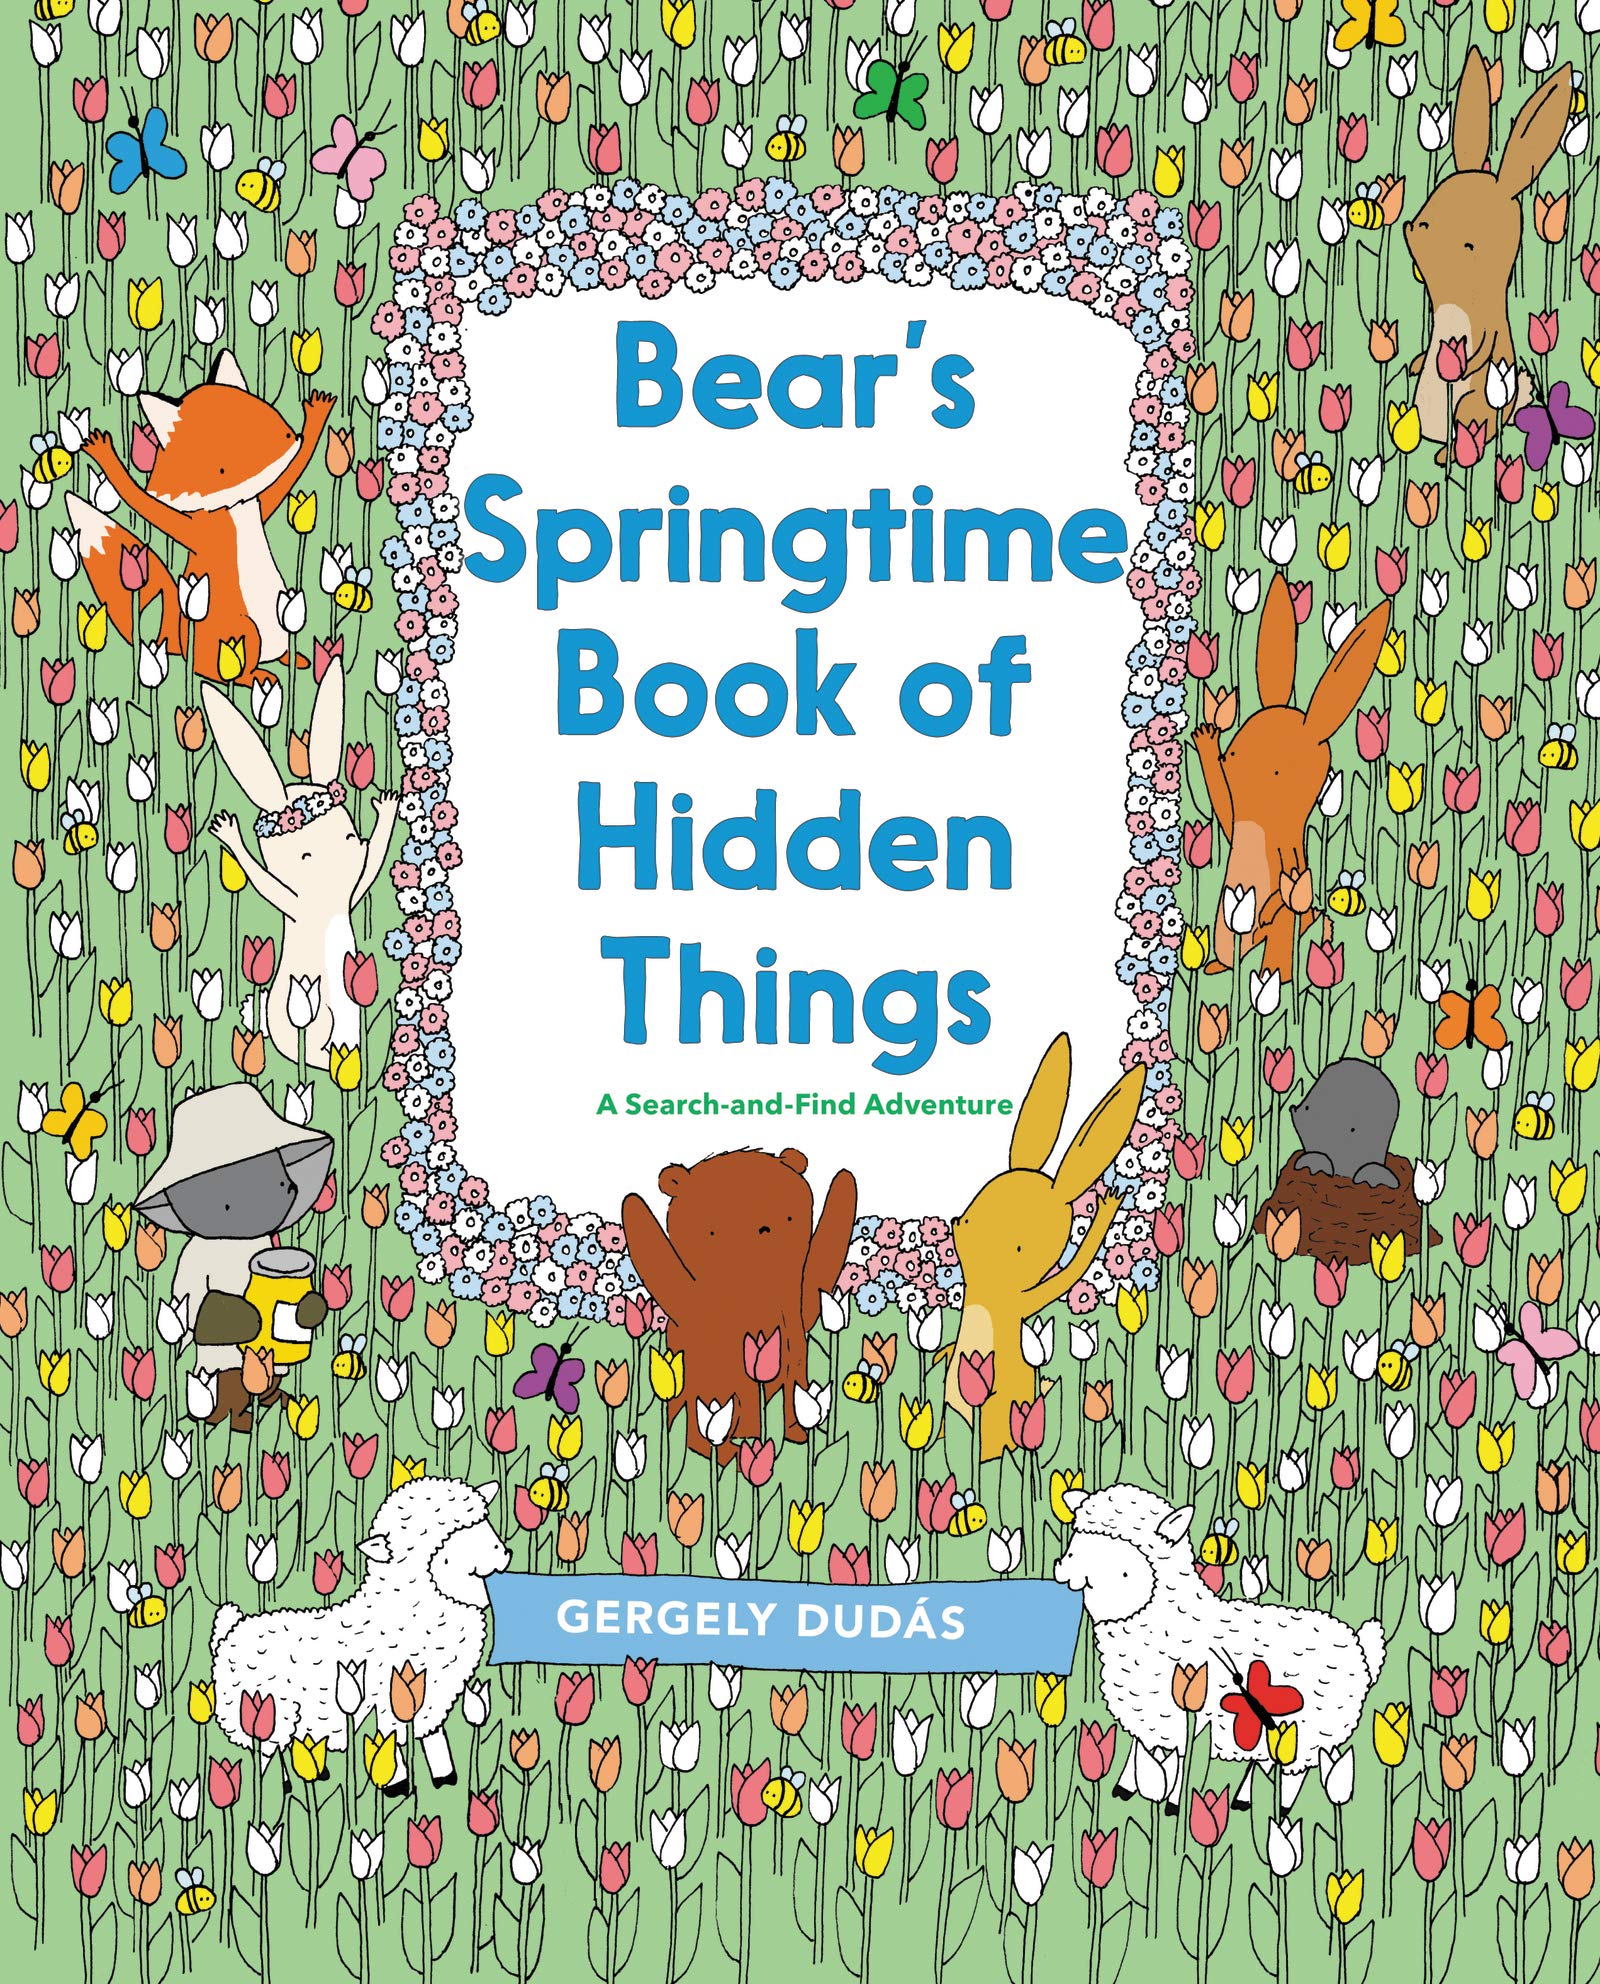 Bear's Springtime Book of Hidden Things cover